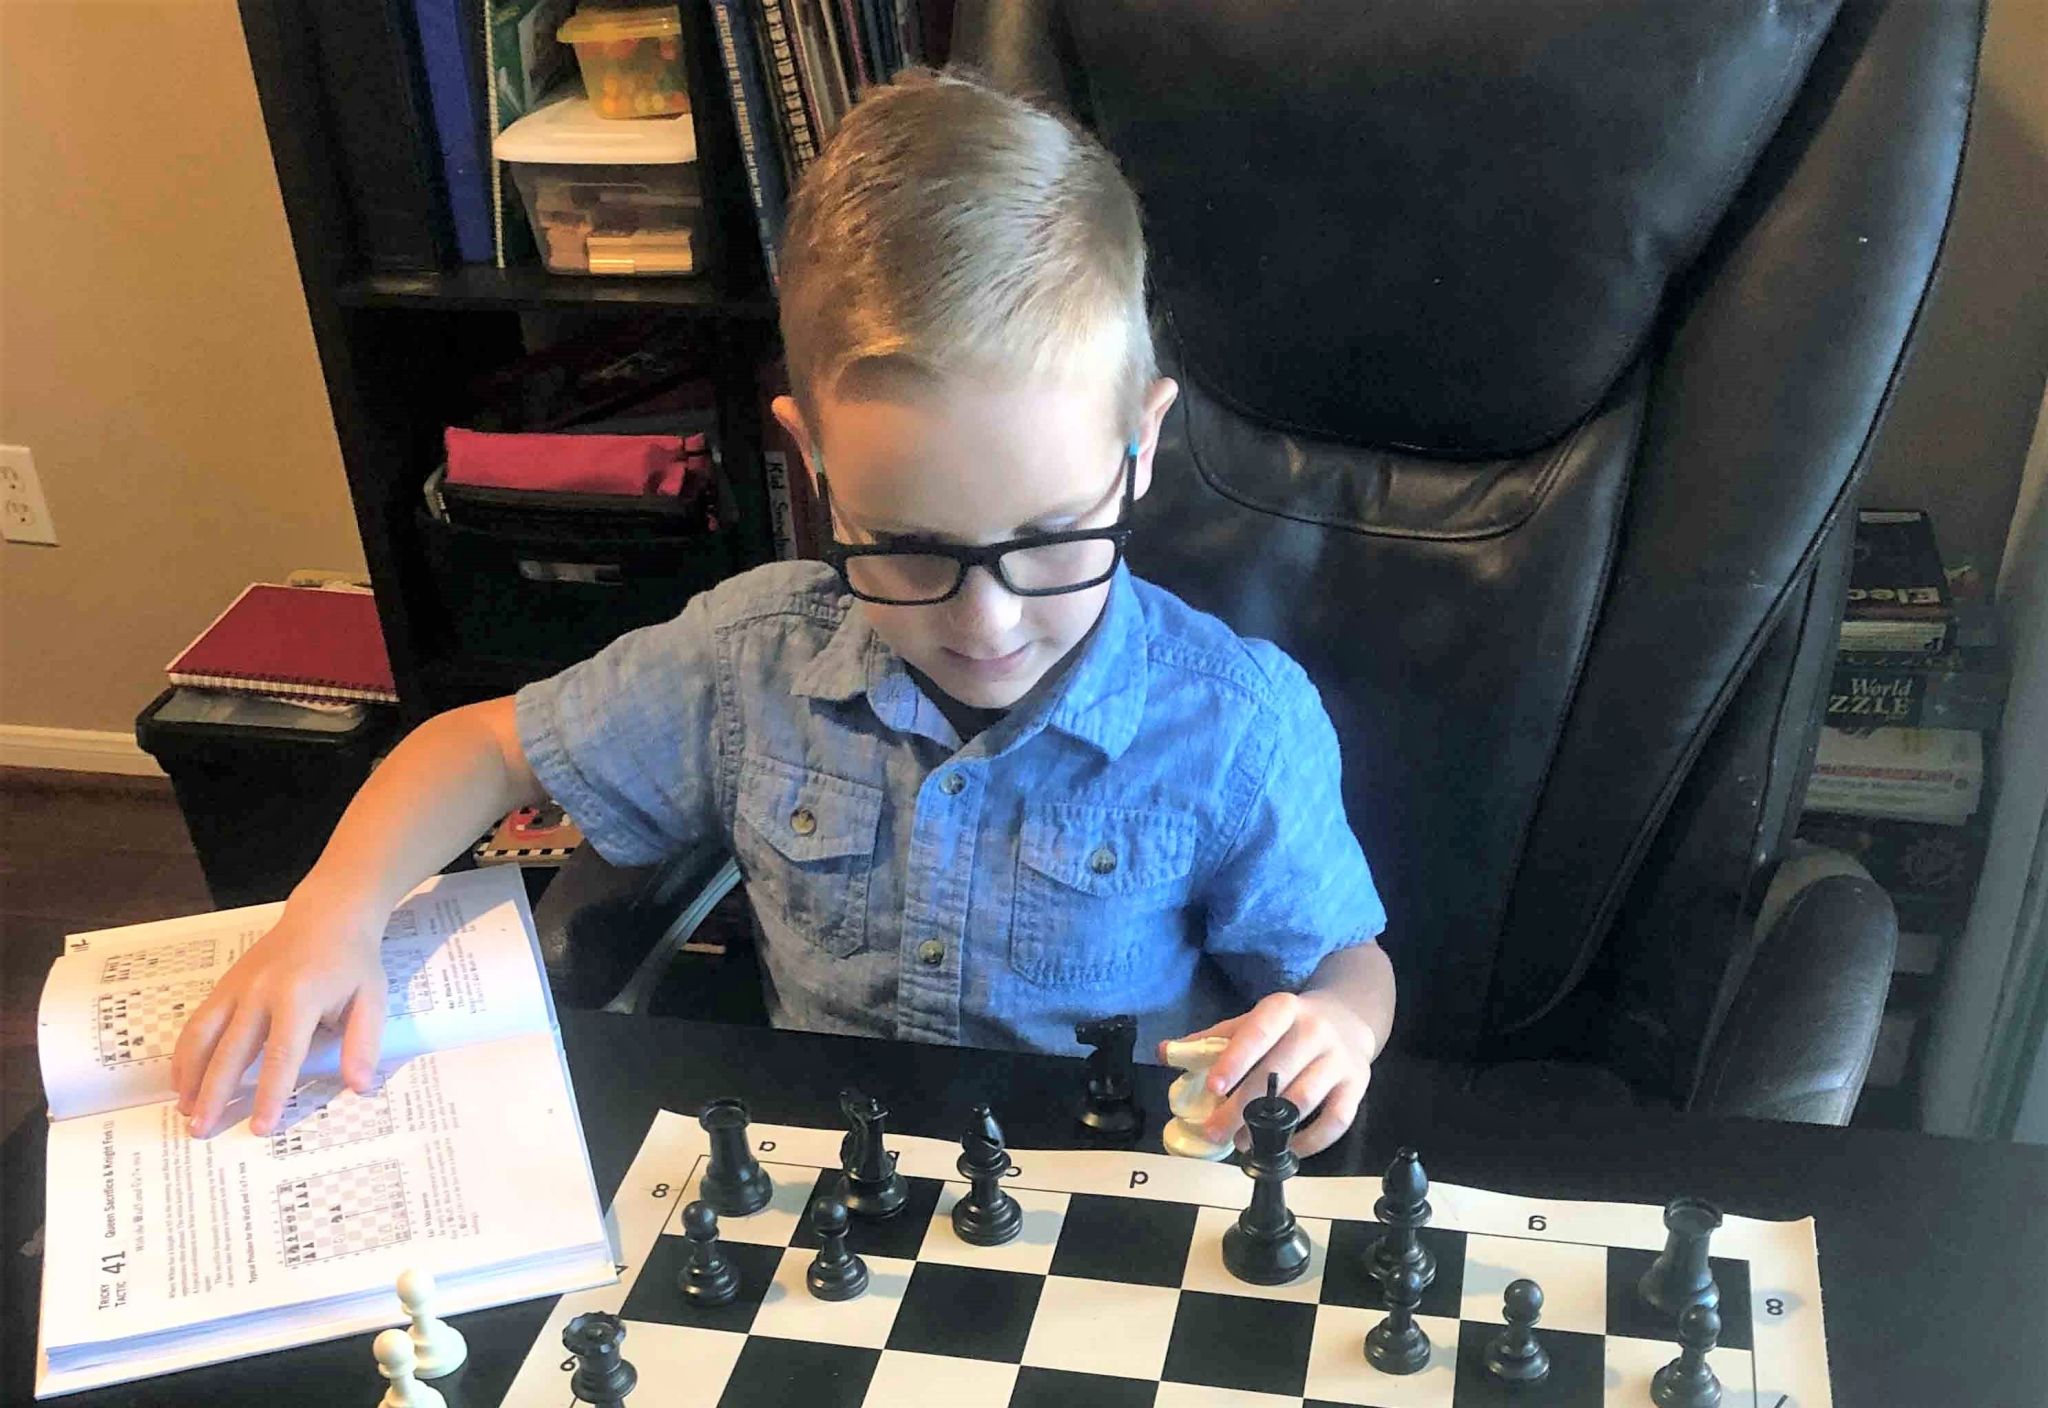 Meet Ryan Mecham, the 7-year-old Houston chess prodigy